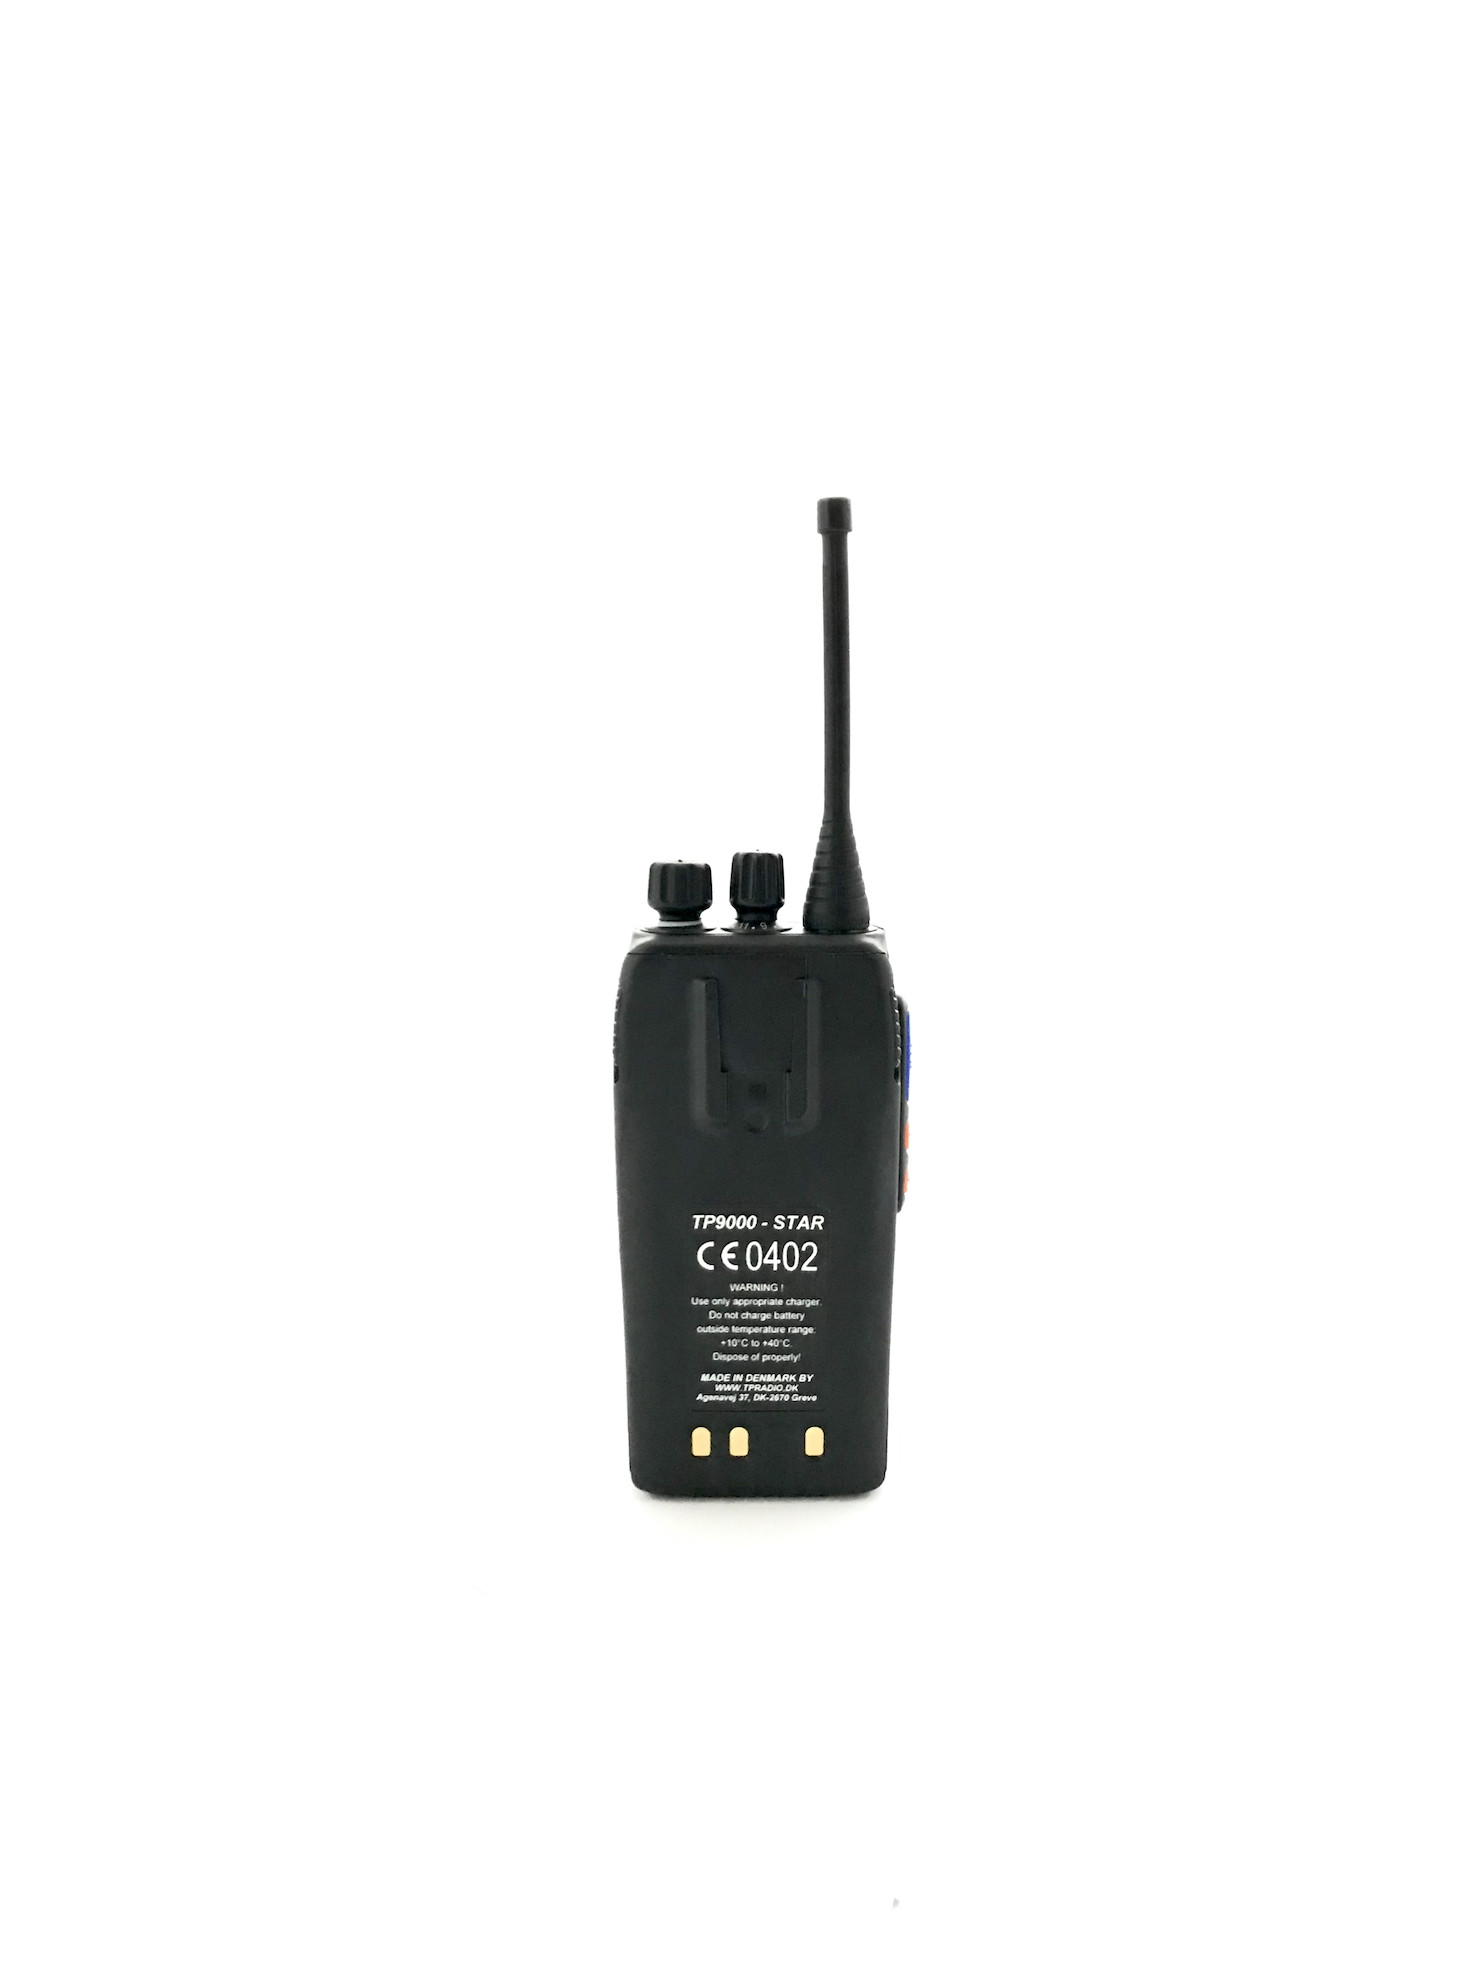 professional handheld portable radio UHF